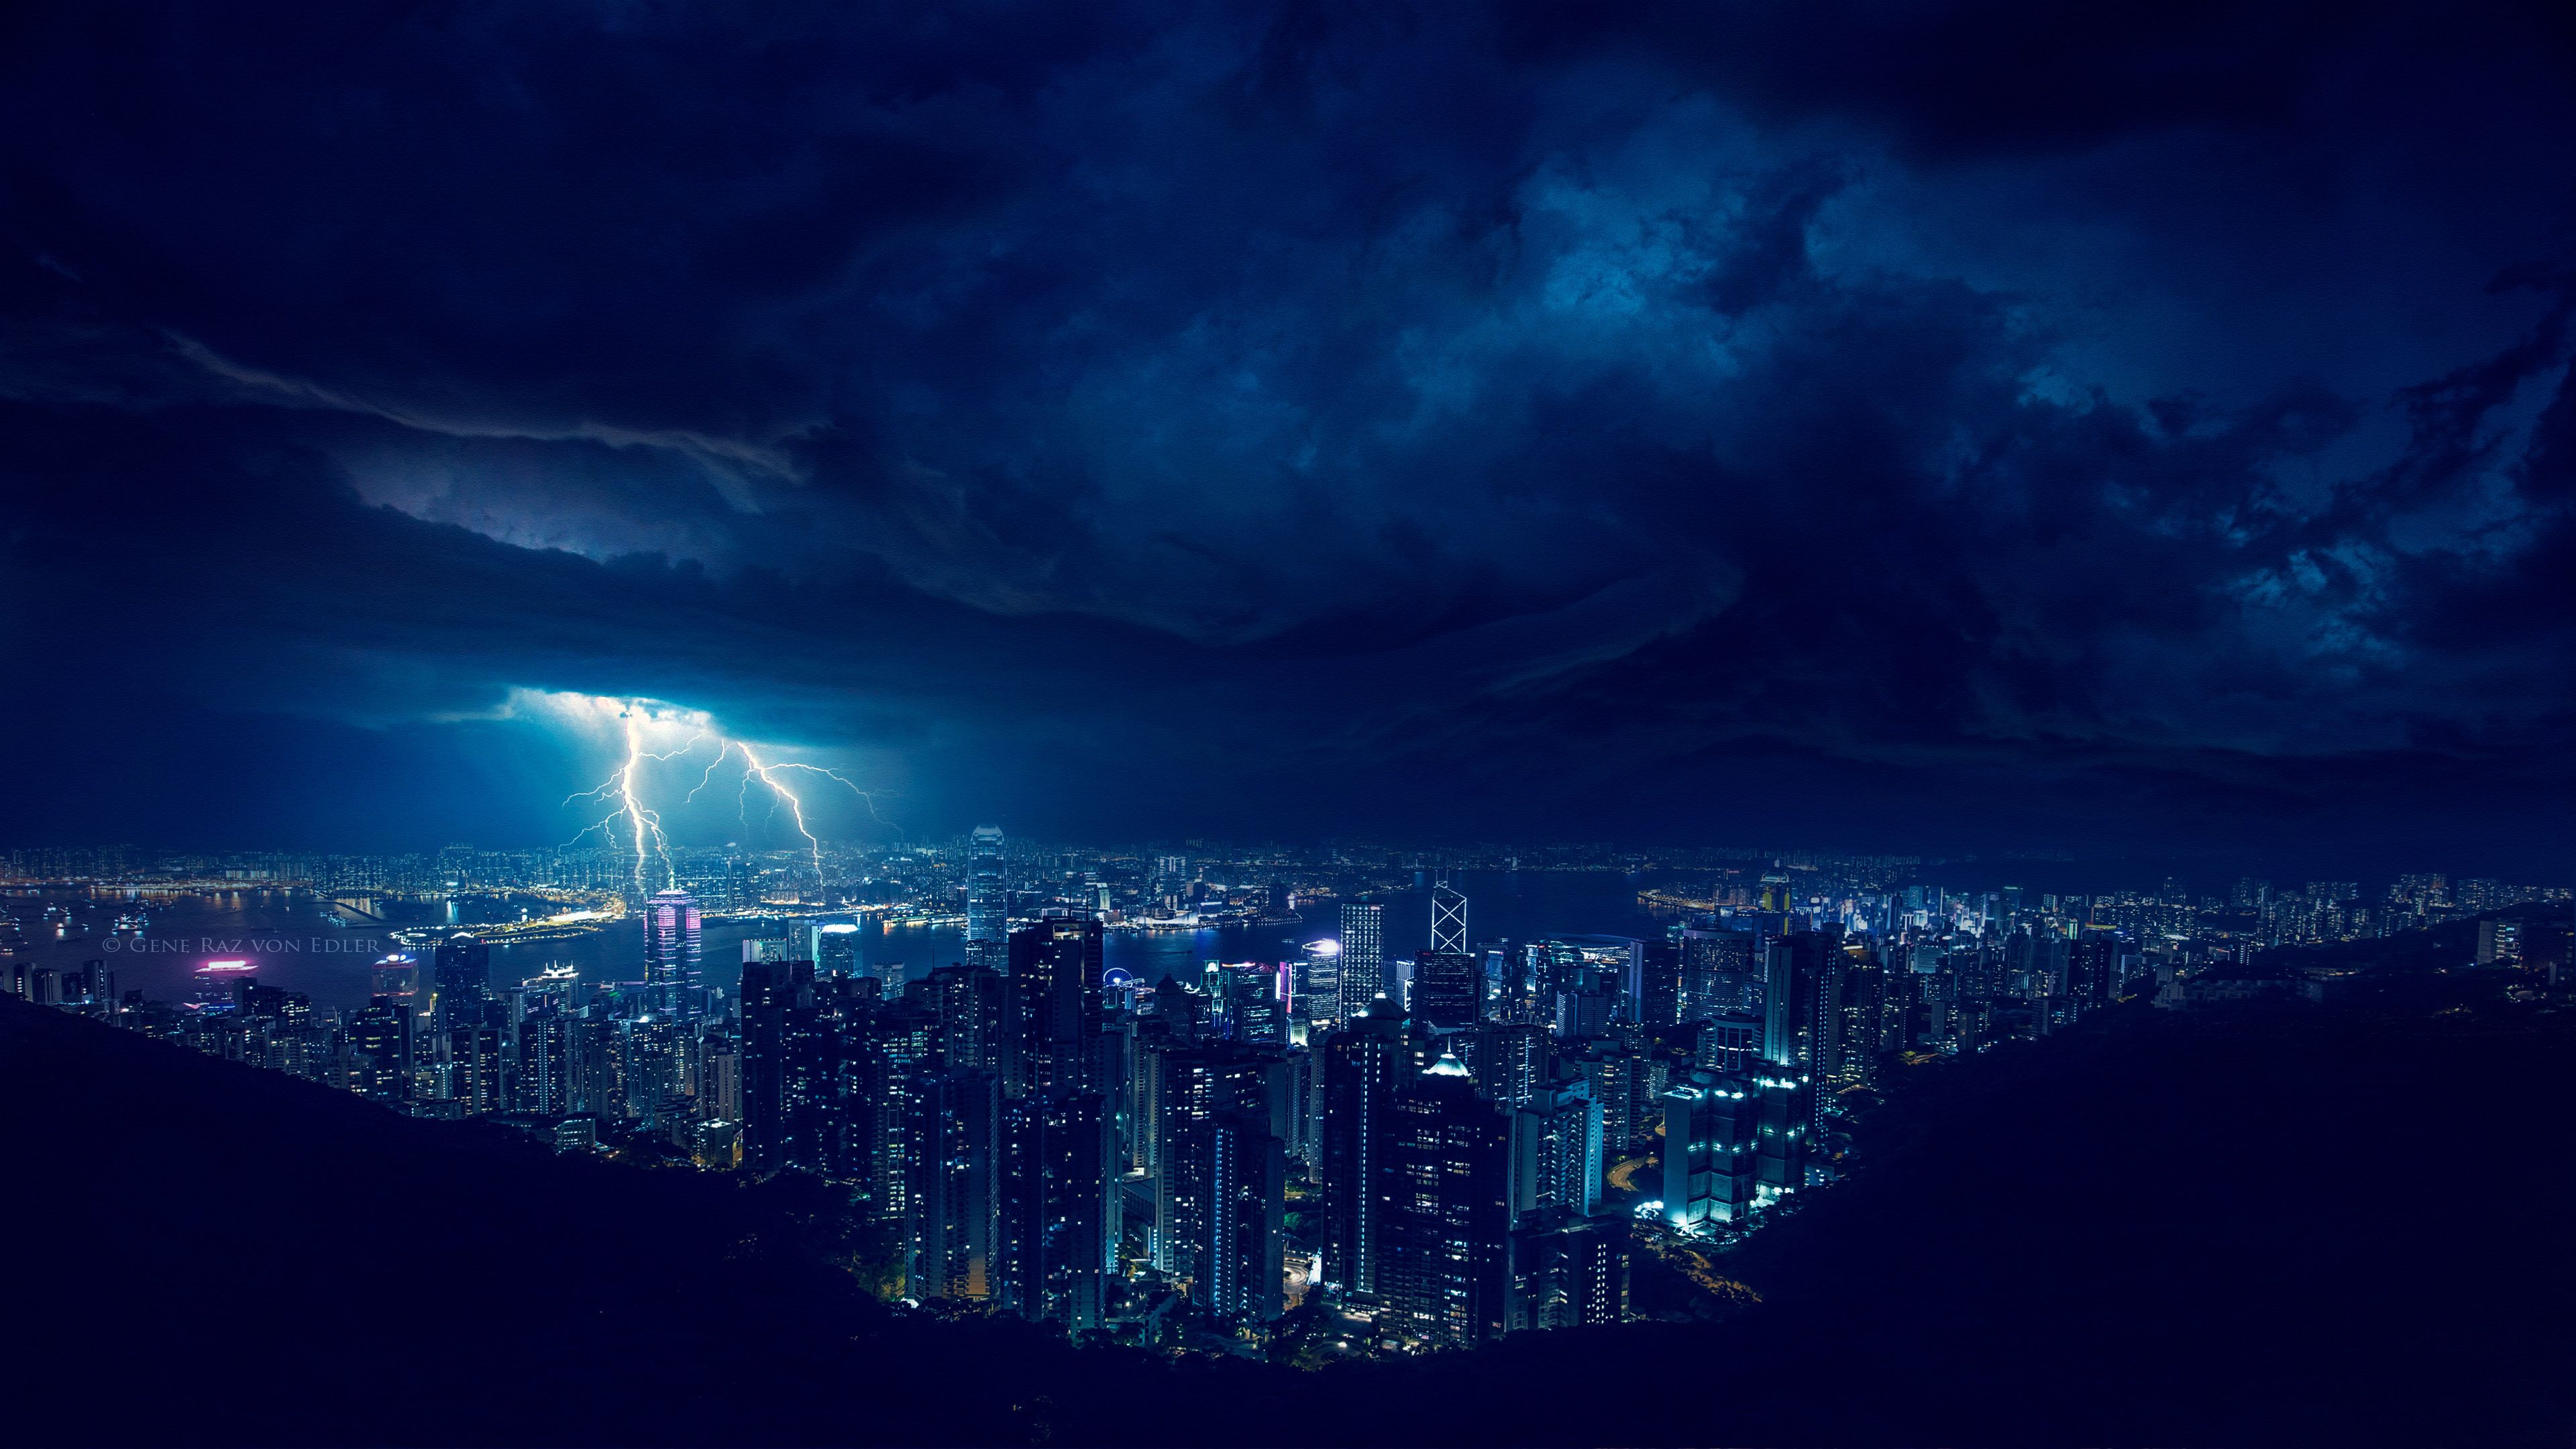 Storm Night Lightning In City 4k, HD Photography, 4k Wallpaper